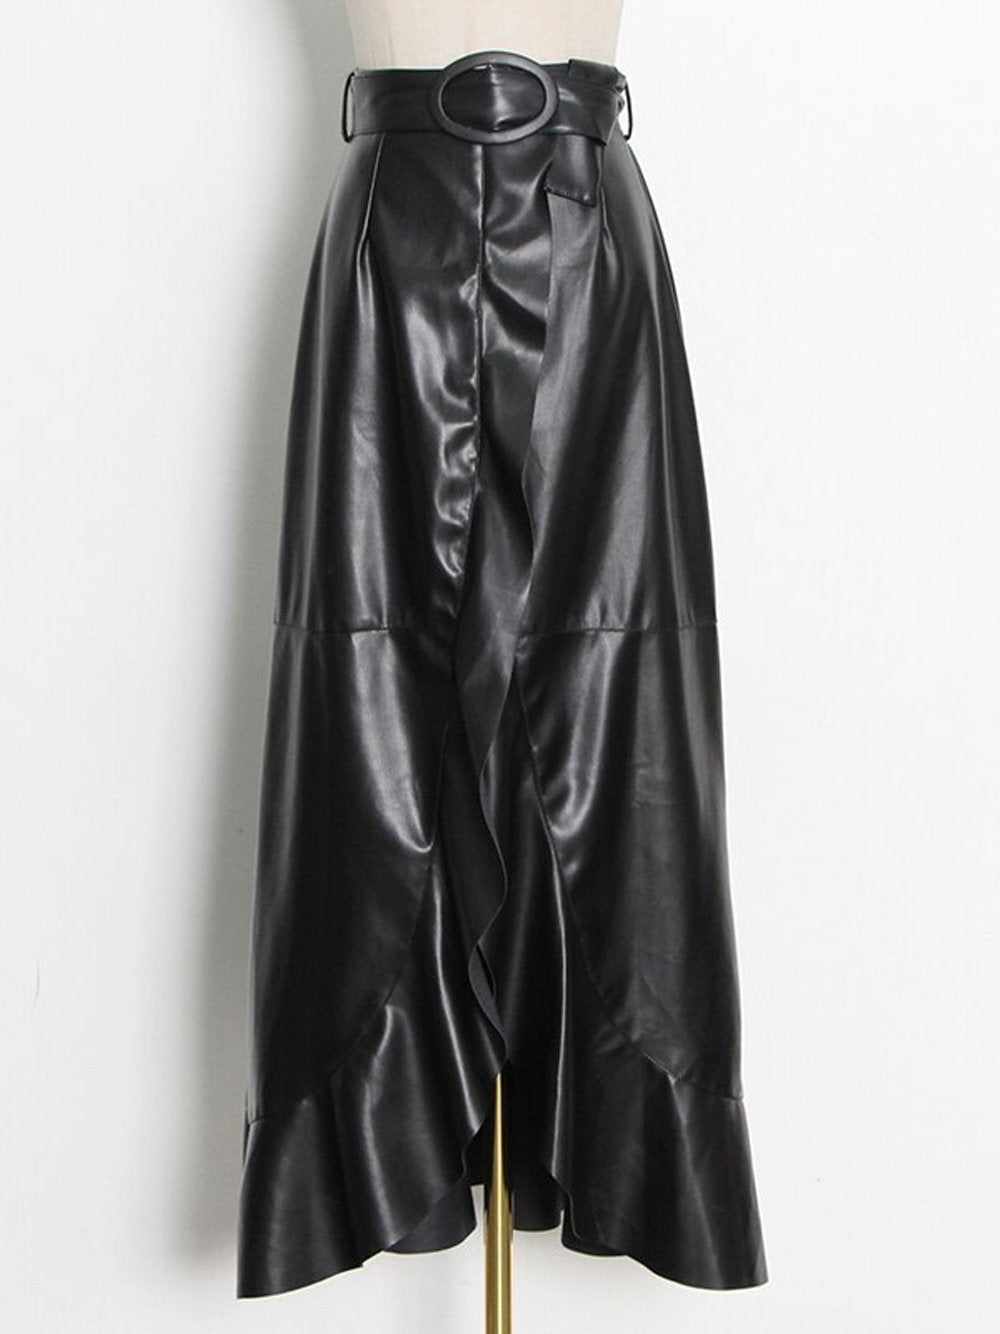 CELOSIA Blouse & Leather Skirt Set